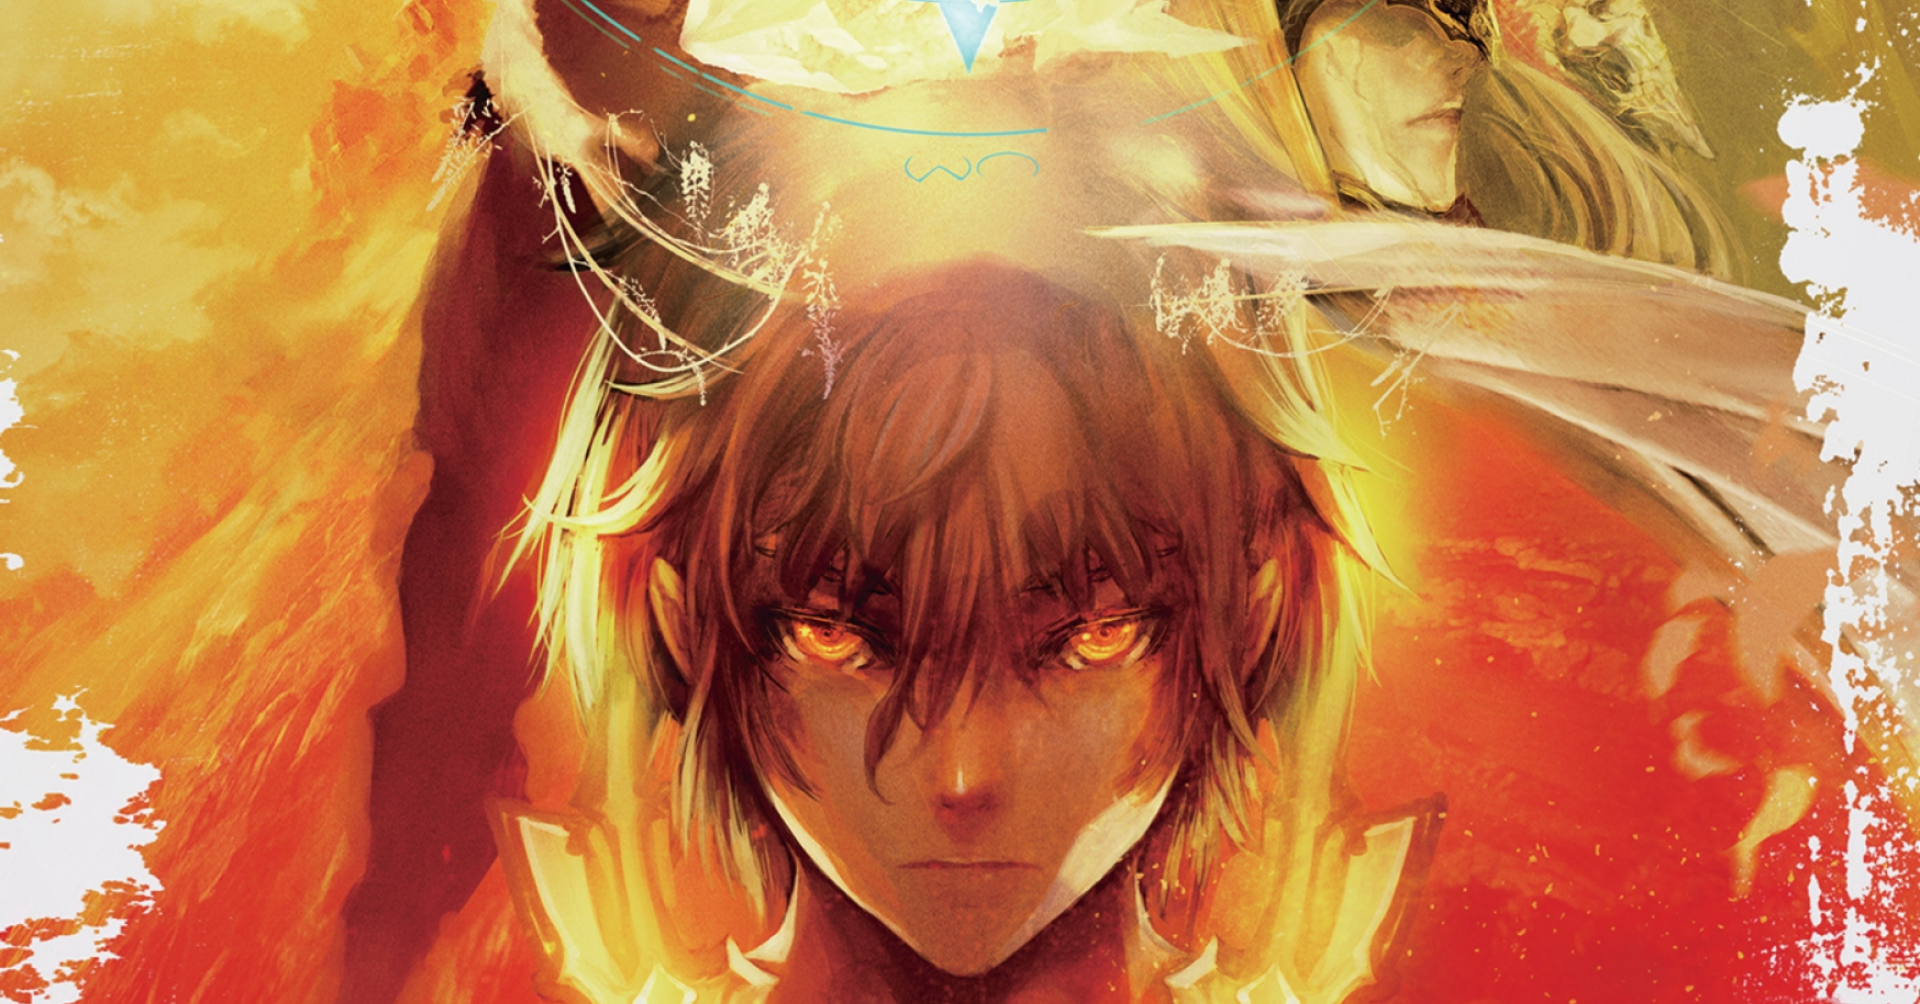 Oregairu Gets a New Light Novel Starring Yui - Anime Corner